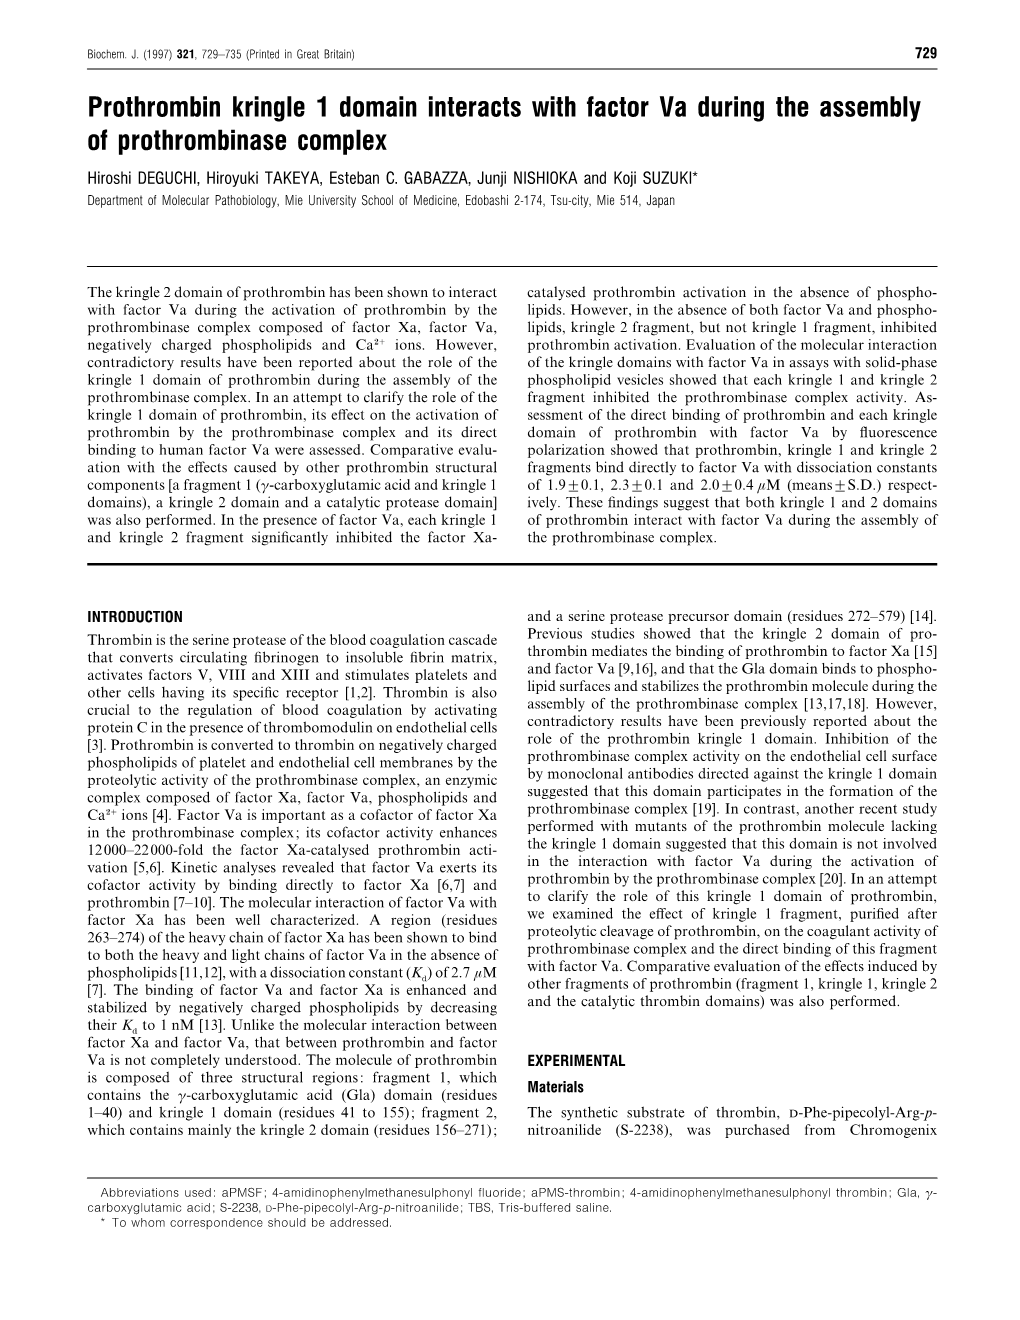 Prothrombin Kringle 1 Domain Interacts with Factor Va During the Assembly of Prothrombinase Complex Hiroshi DEGUCHI, Hiroyuki TAKEYA, Esteban C